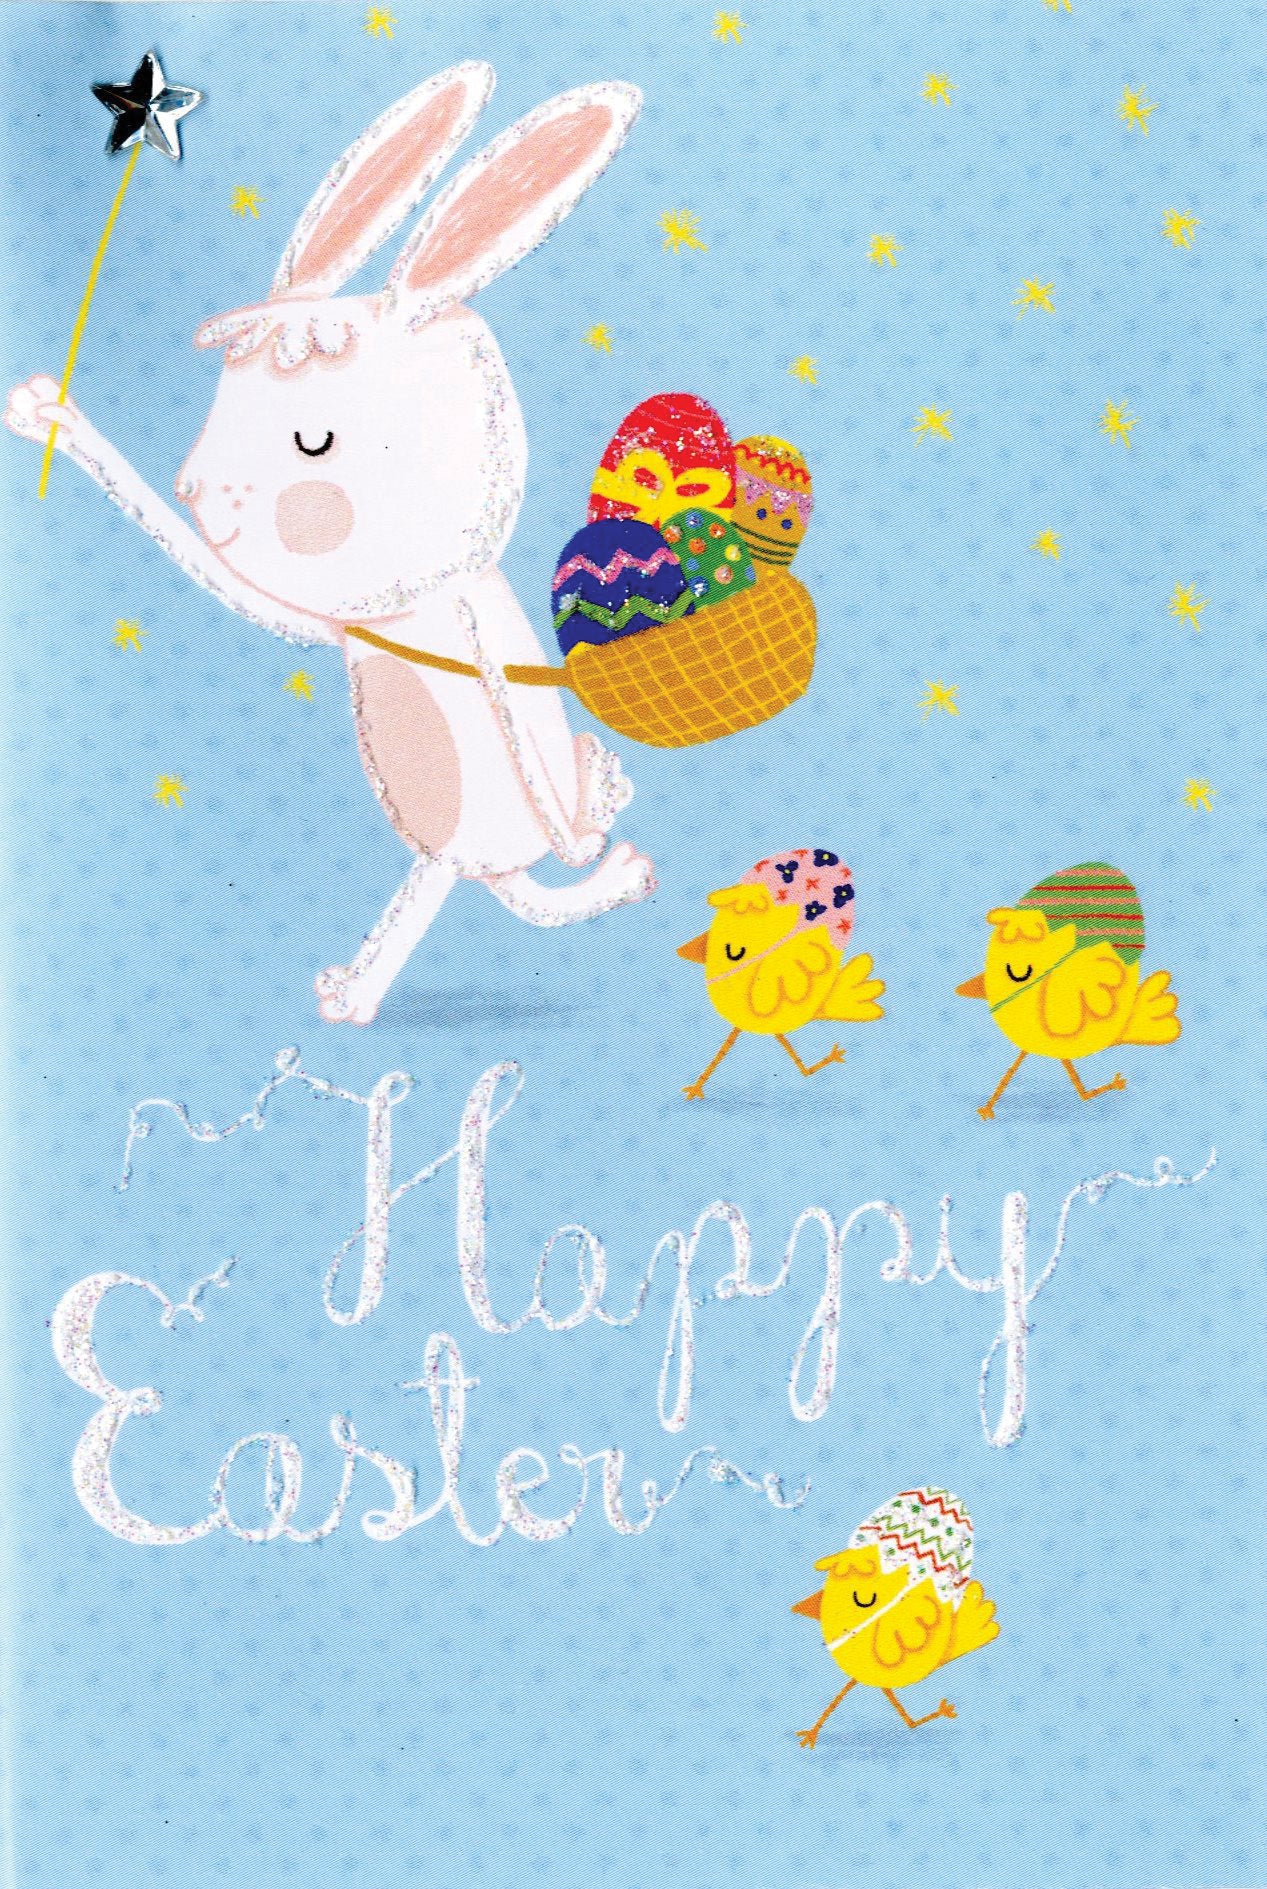 Hoppy Easter Card Cute Hello You Embellished Card